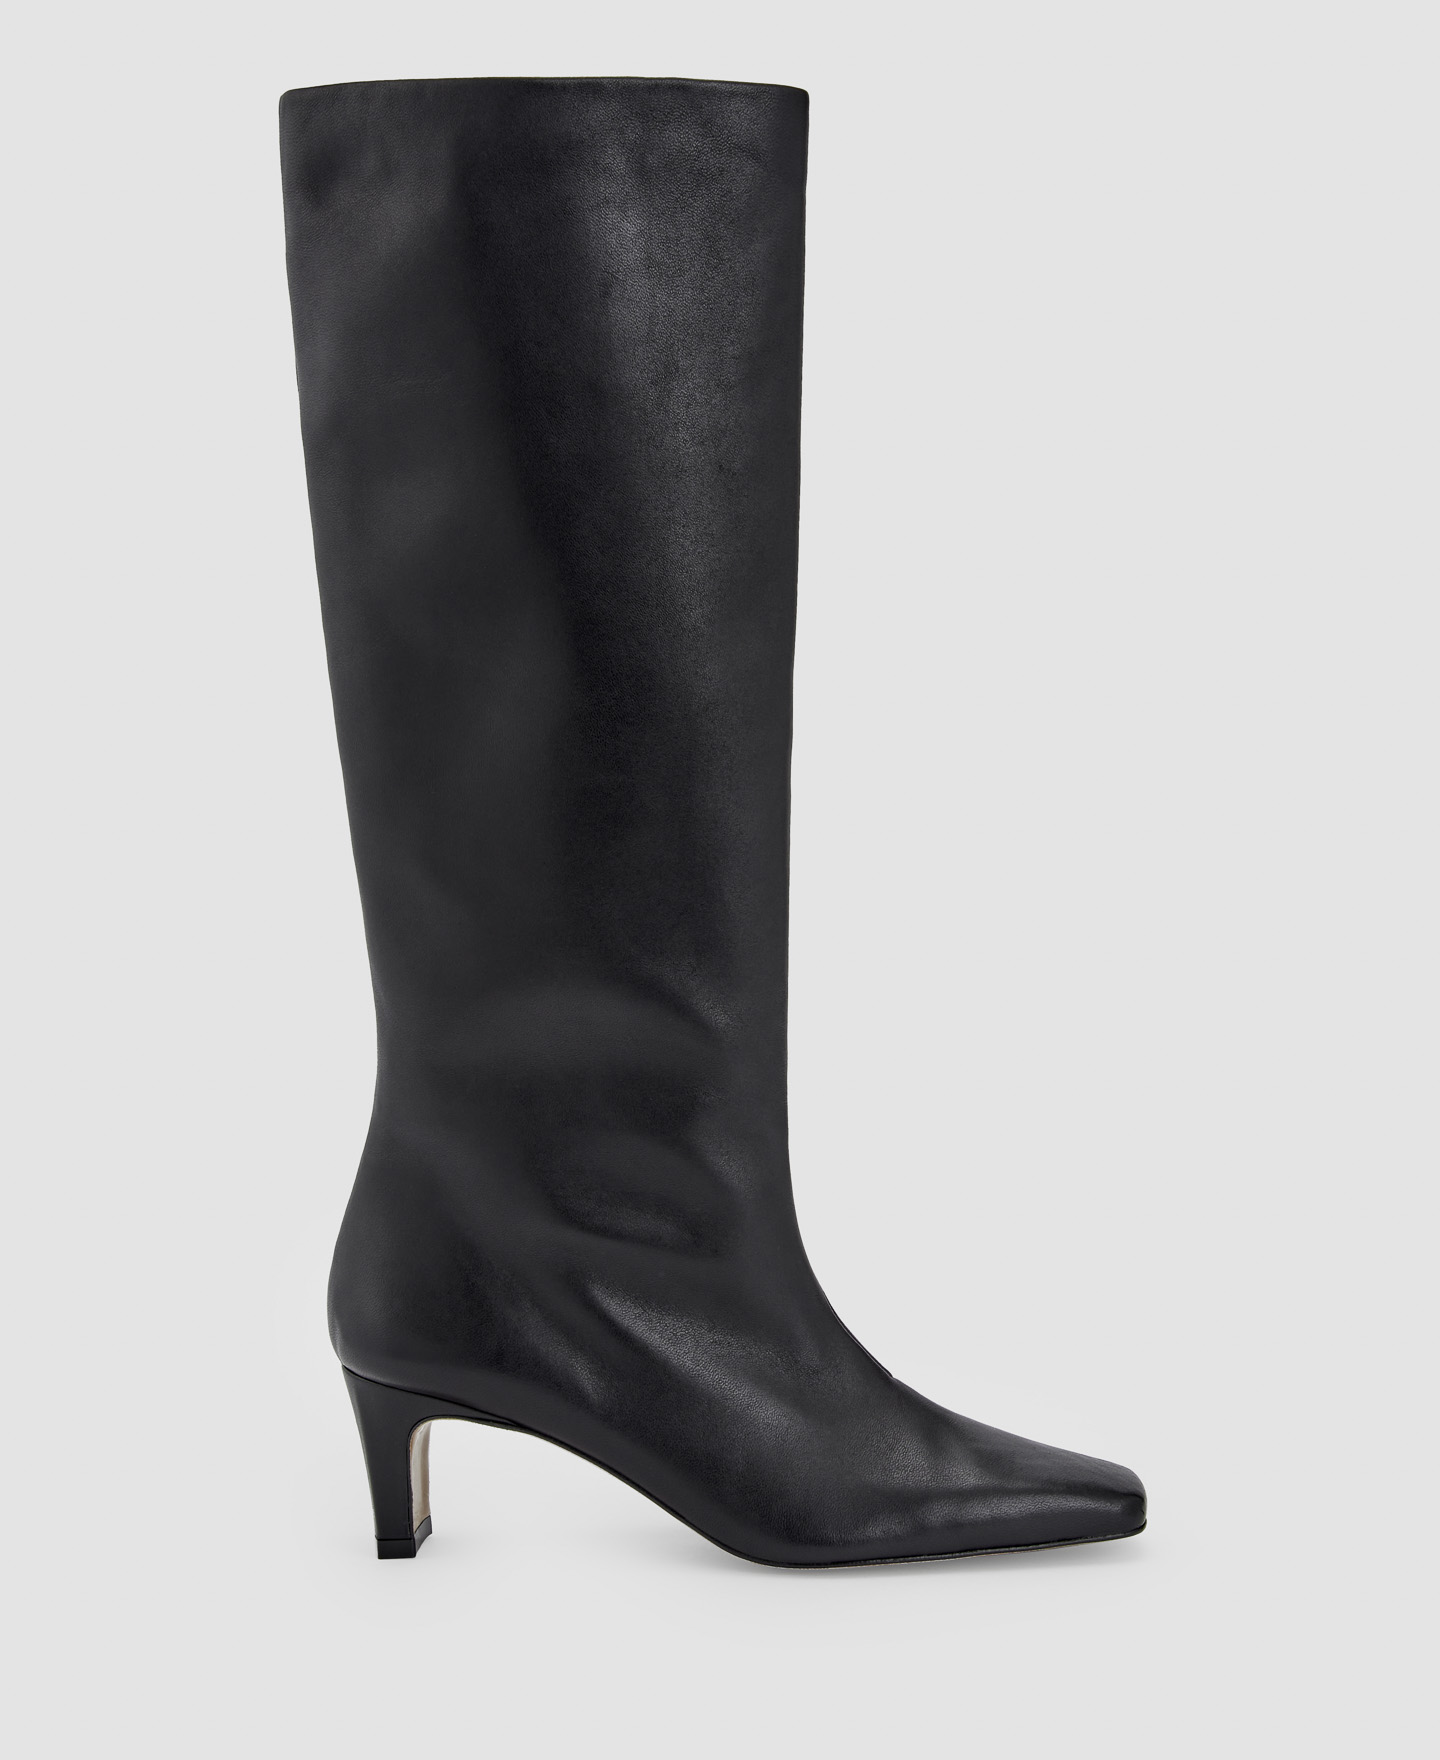 Bovine leather boot | AD Europa